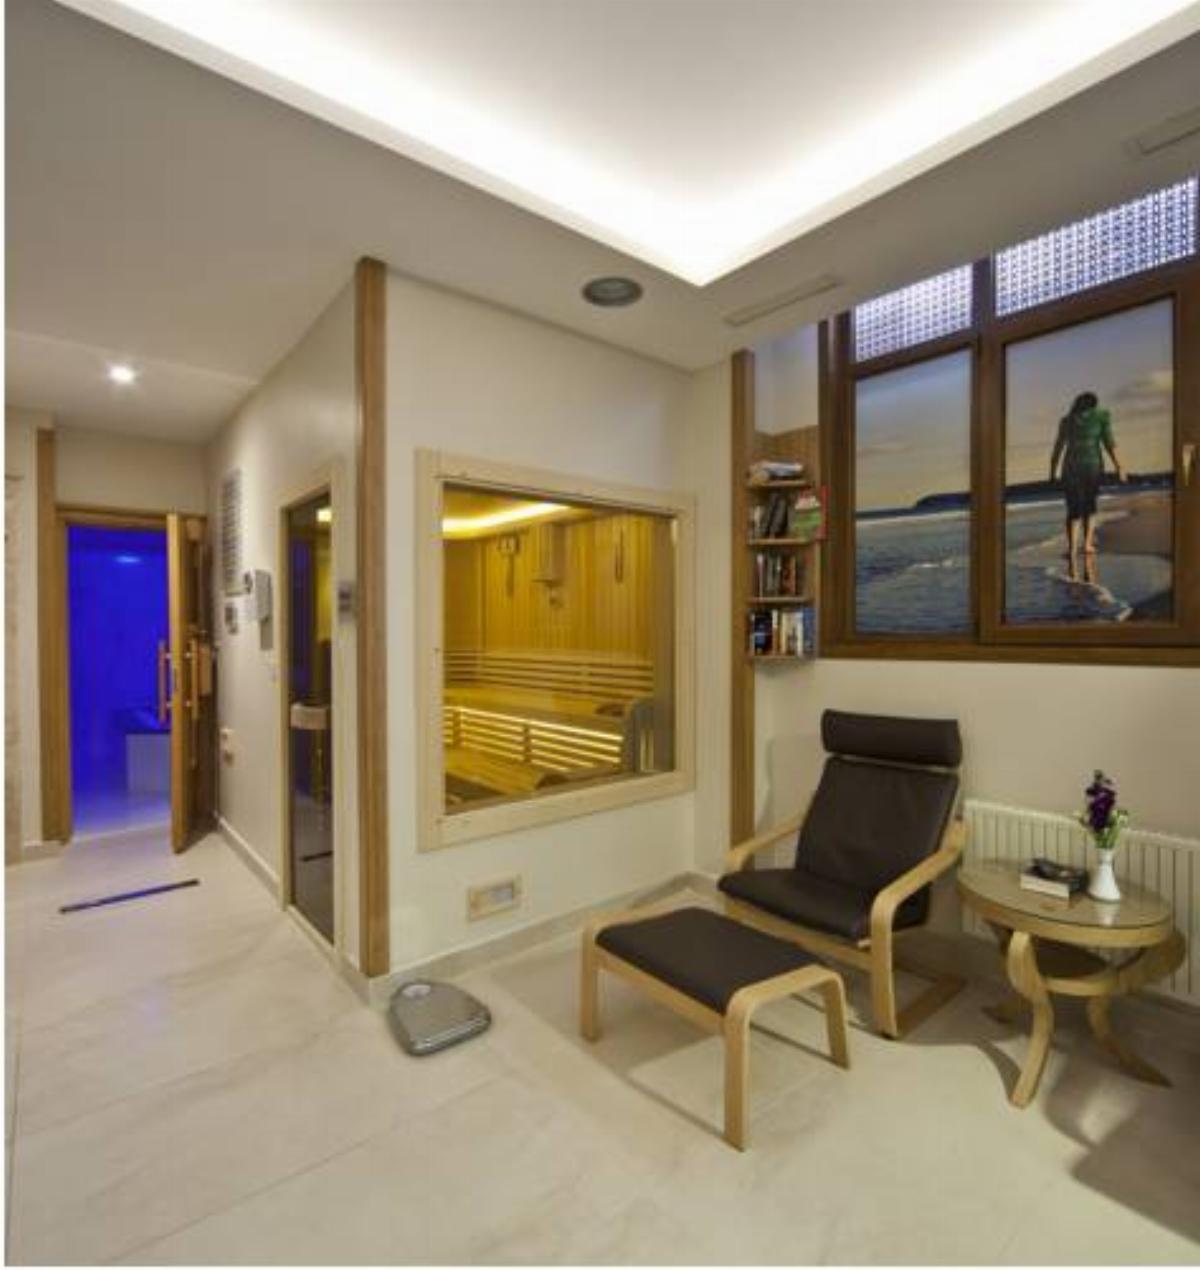 GLK PREMIER Acropol Suites & Spa Hotel İstanbul Turkey